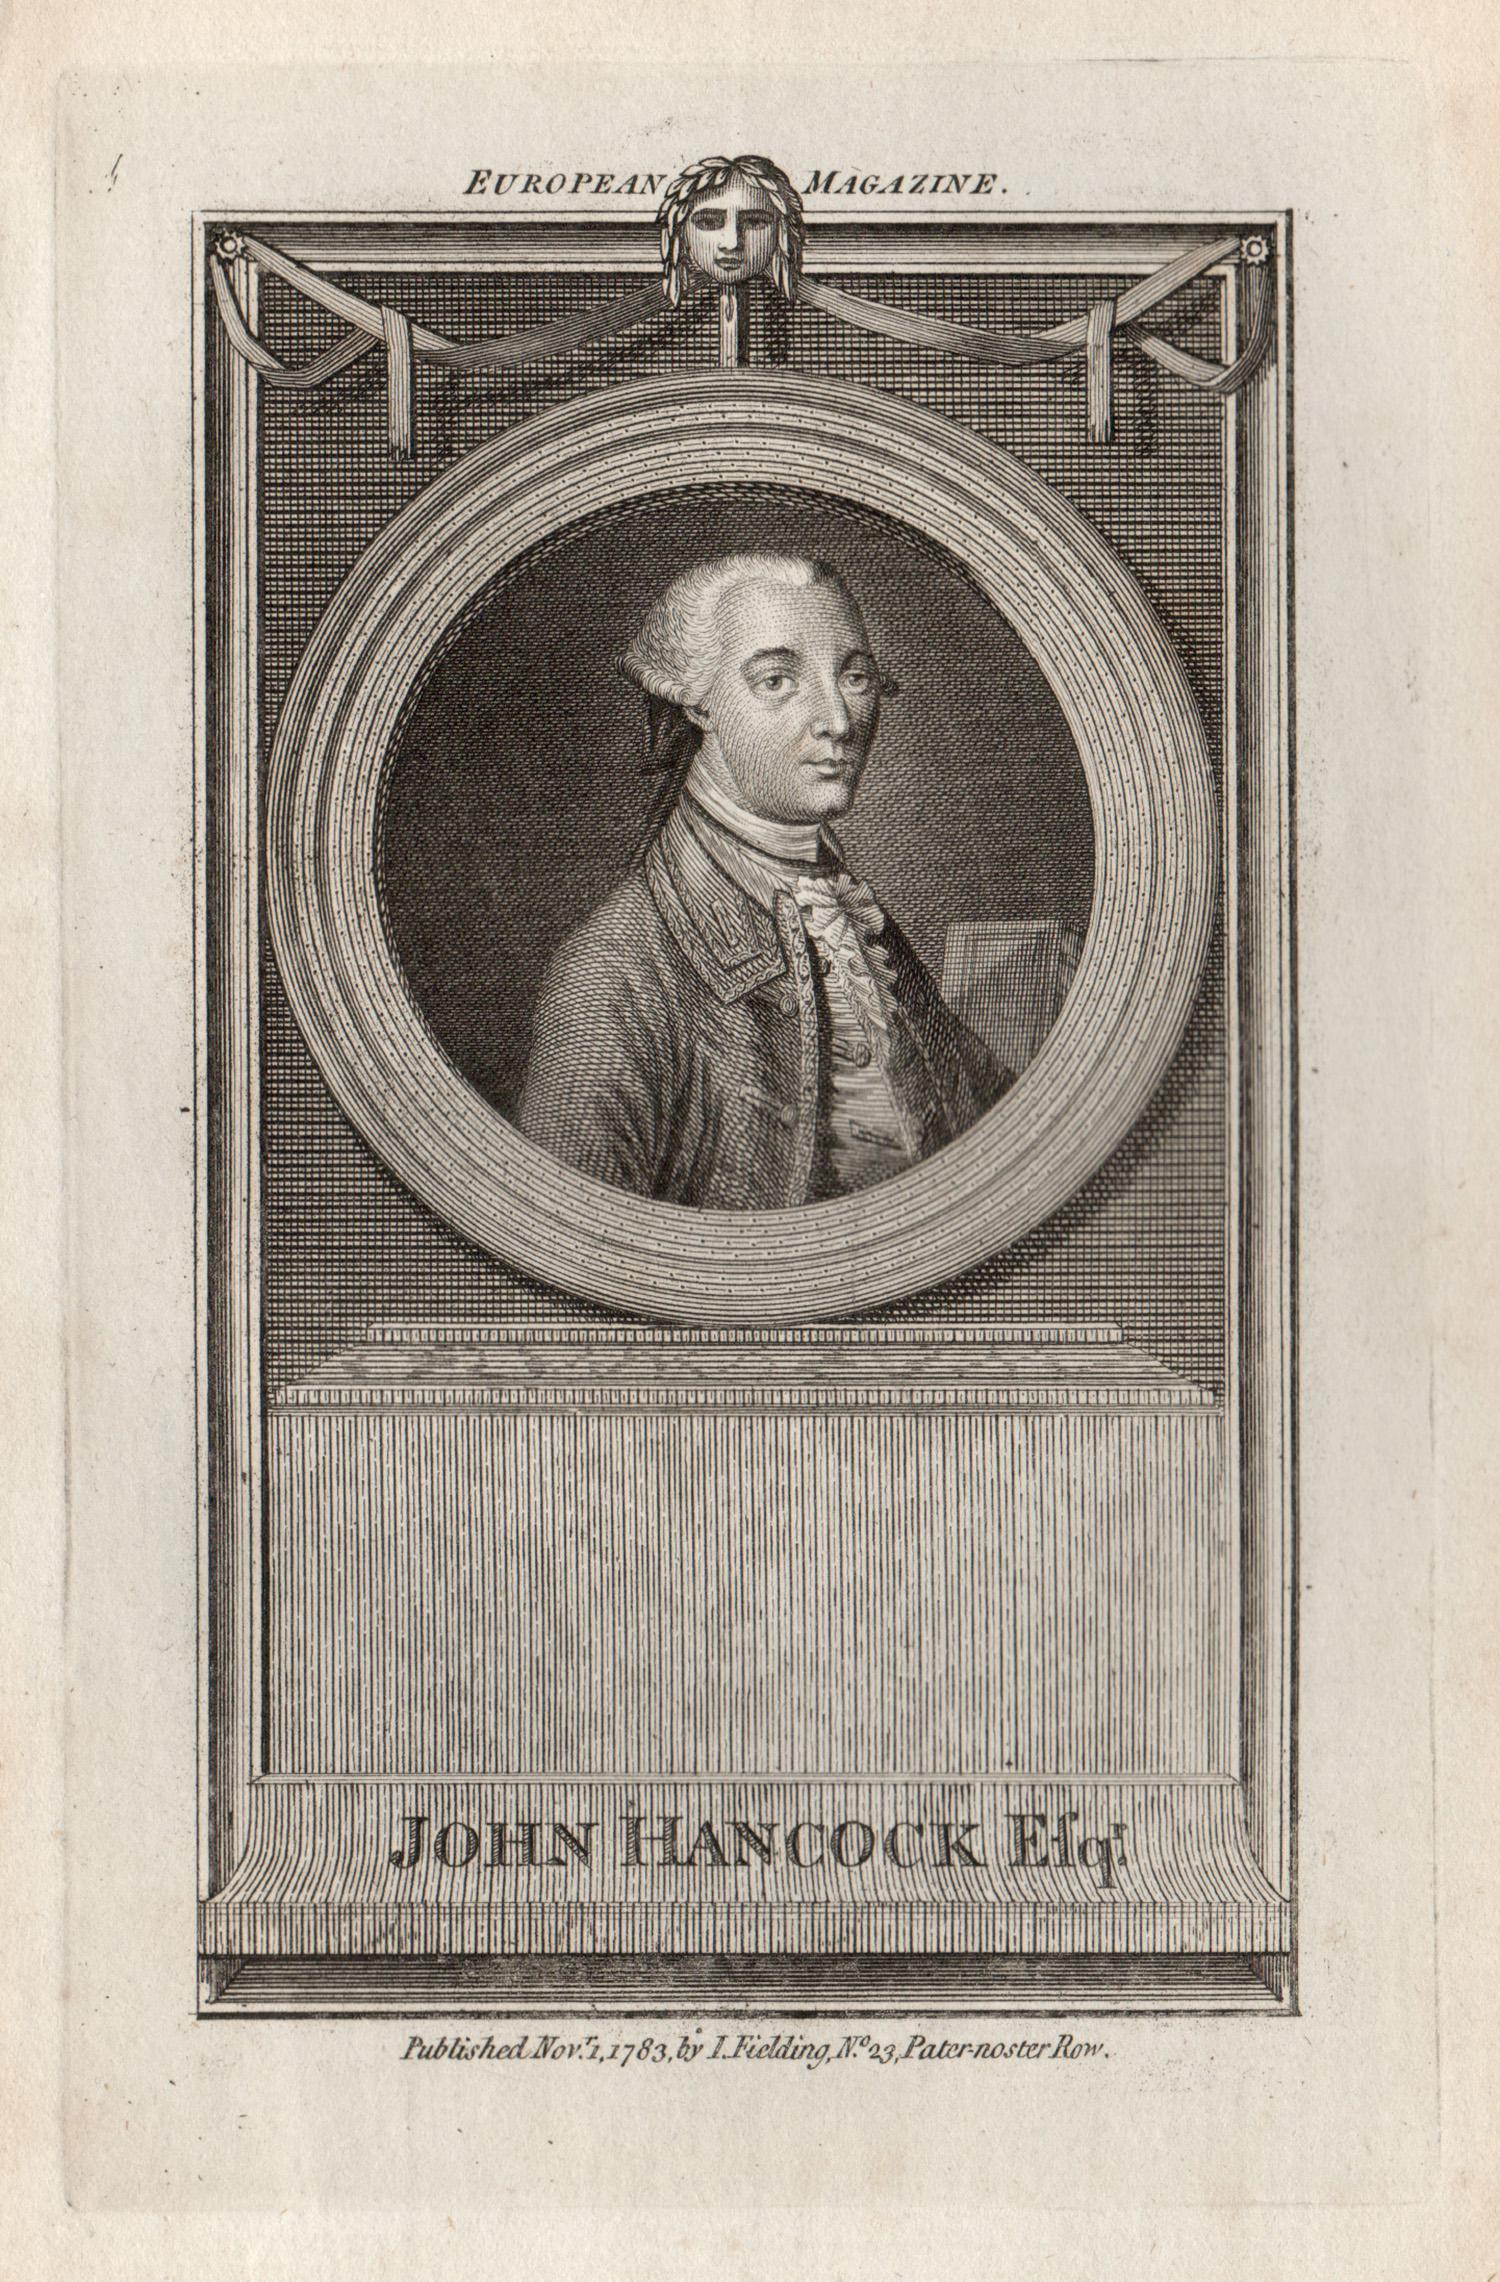 Unknown Portrait Print - John Hancock, Patriot of the American Revolution, portrait engraving, 1783